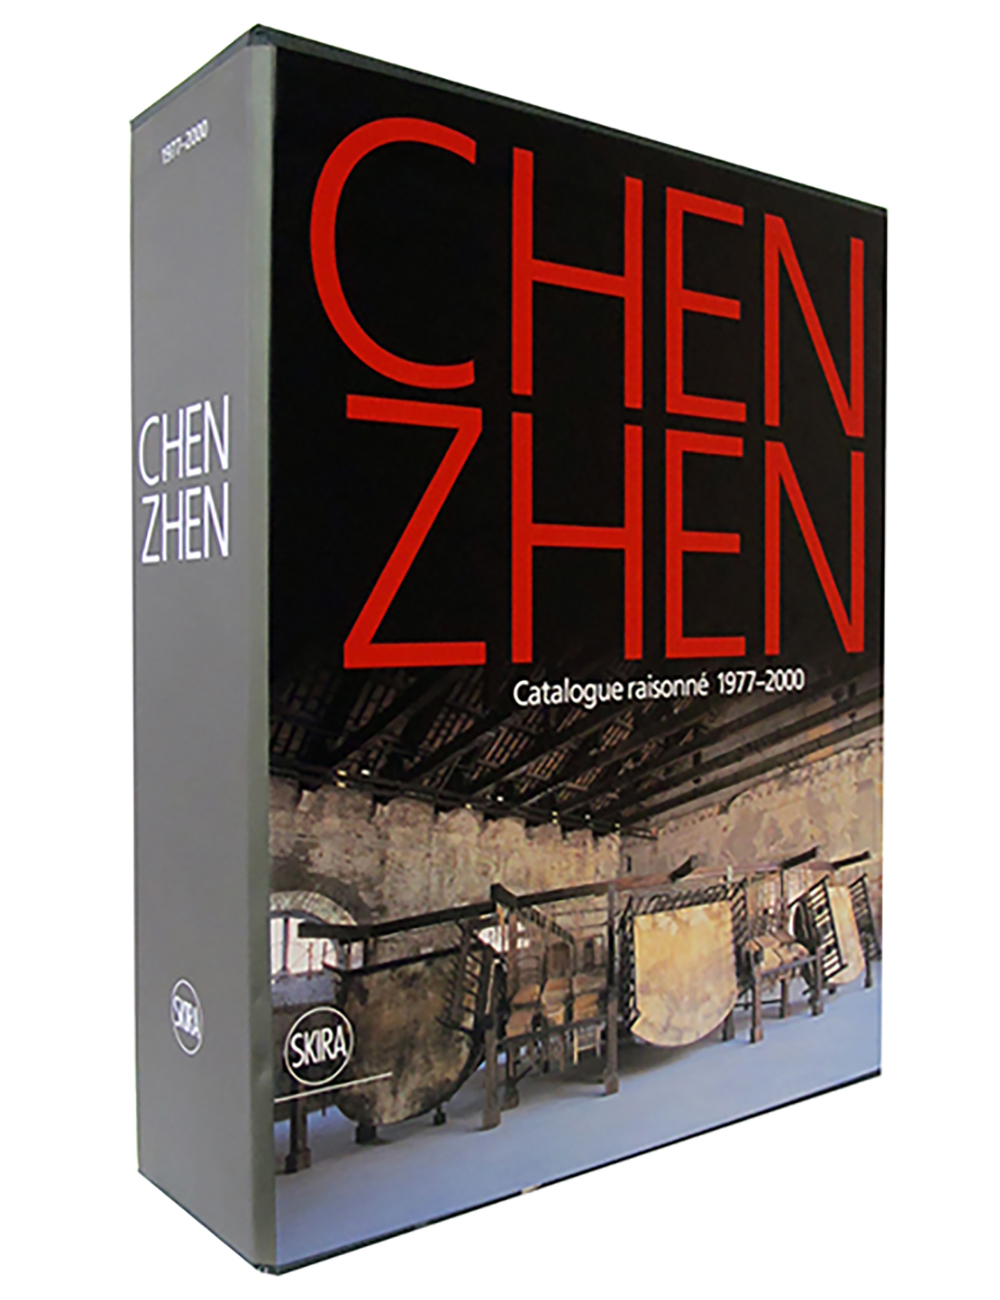 Galleria Continua - Chen Zhen. Catalogue Raisonné. Volume I (1977 - 1996) and Volume II (1997 - 2000)